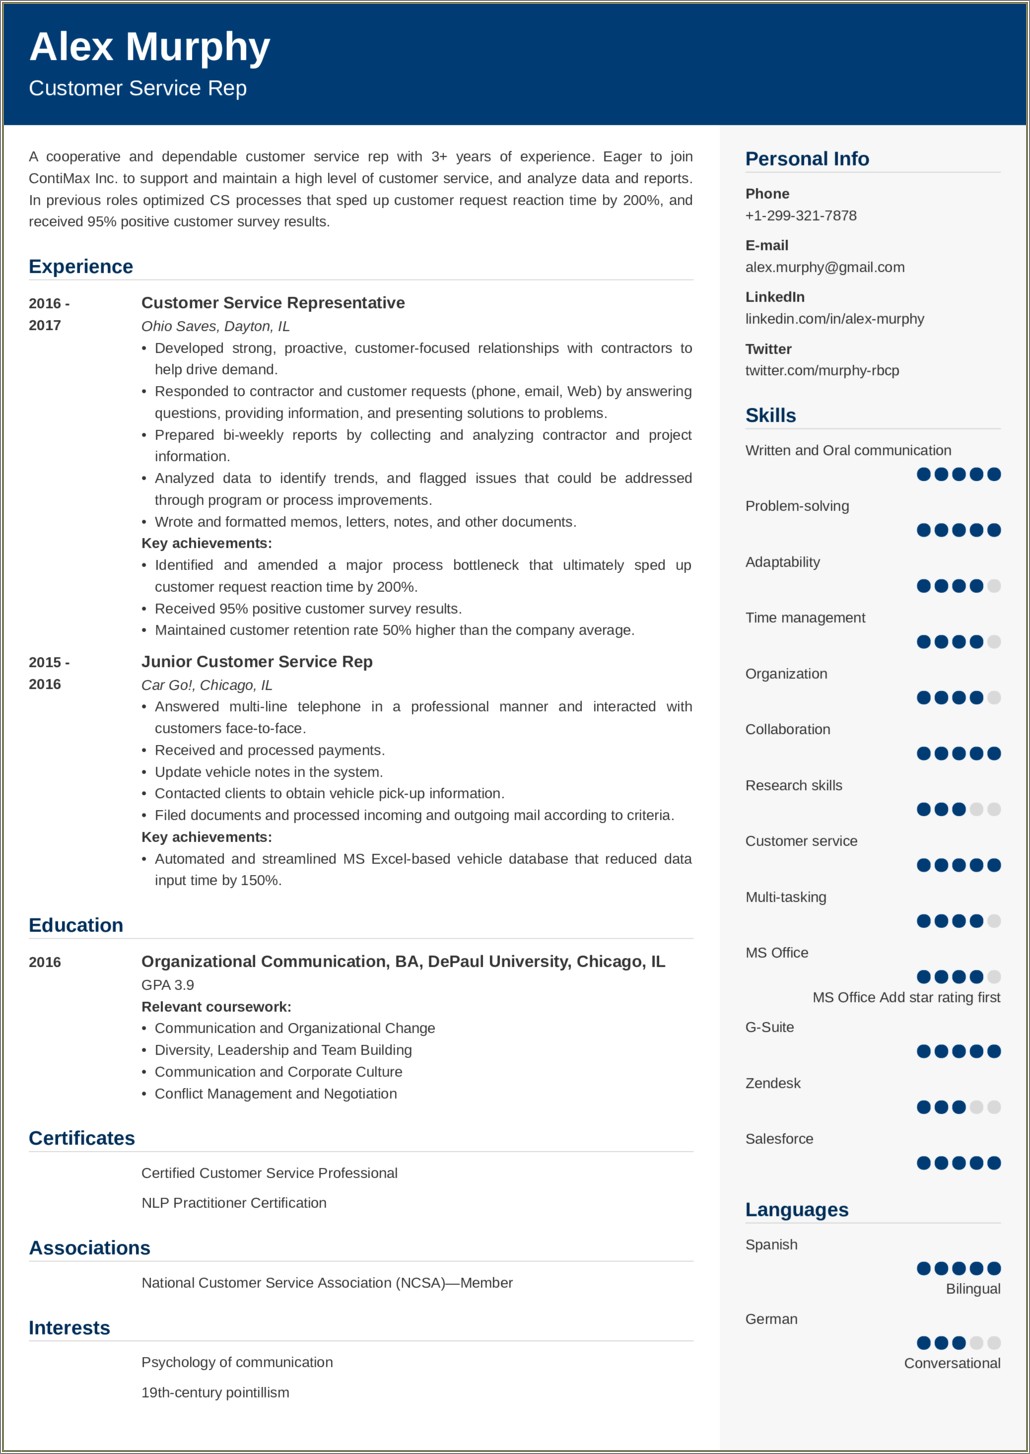 Resume Using Commas To Site Job Responsibilities